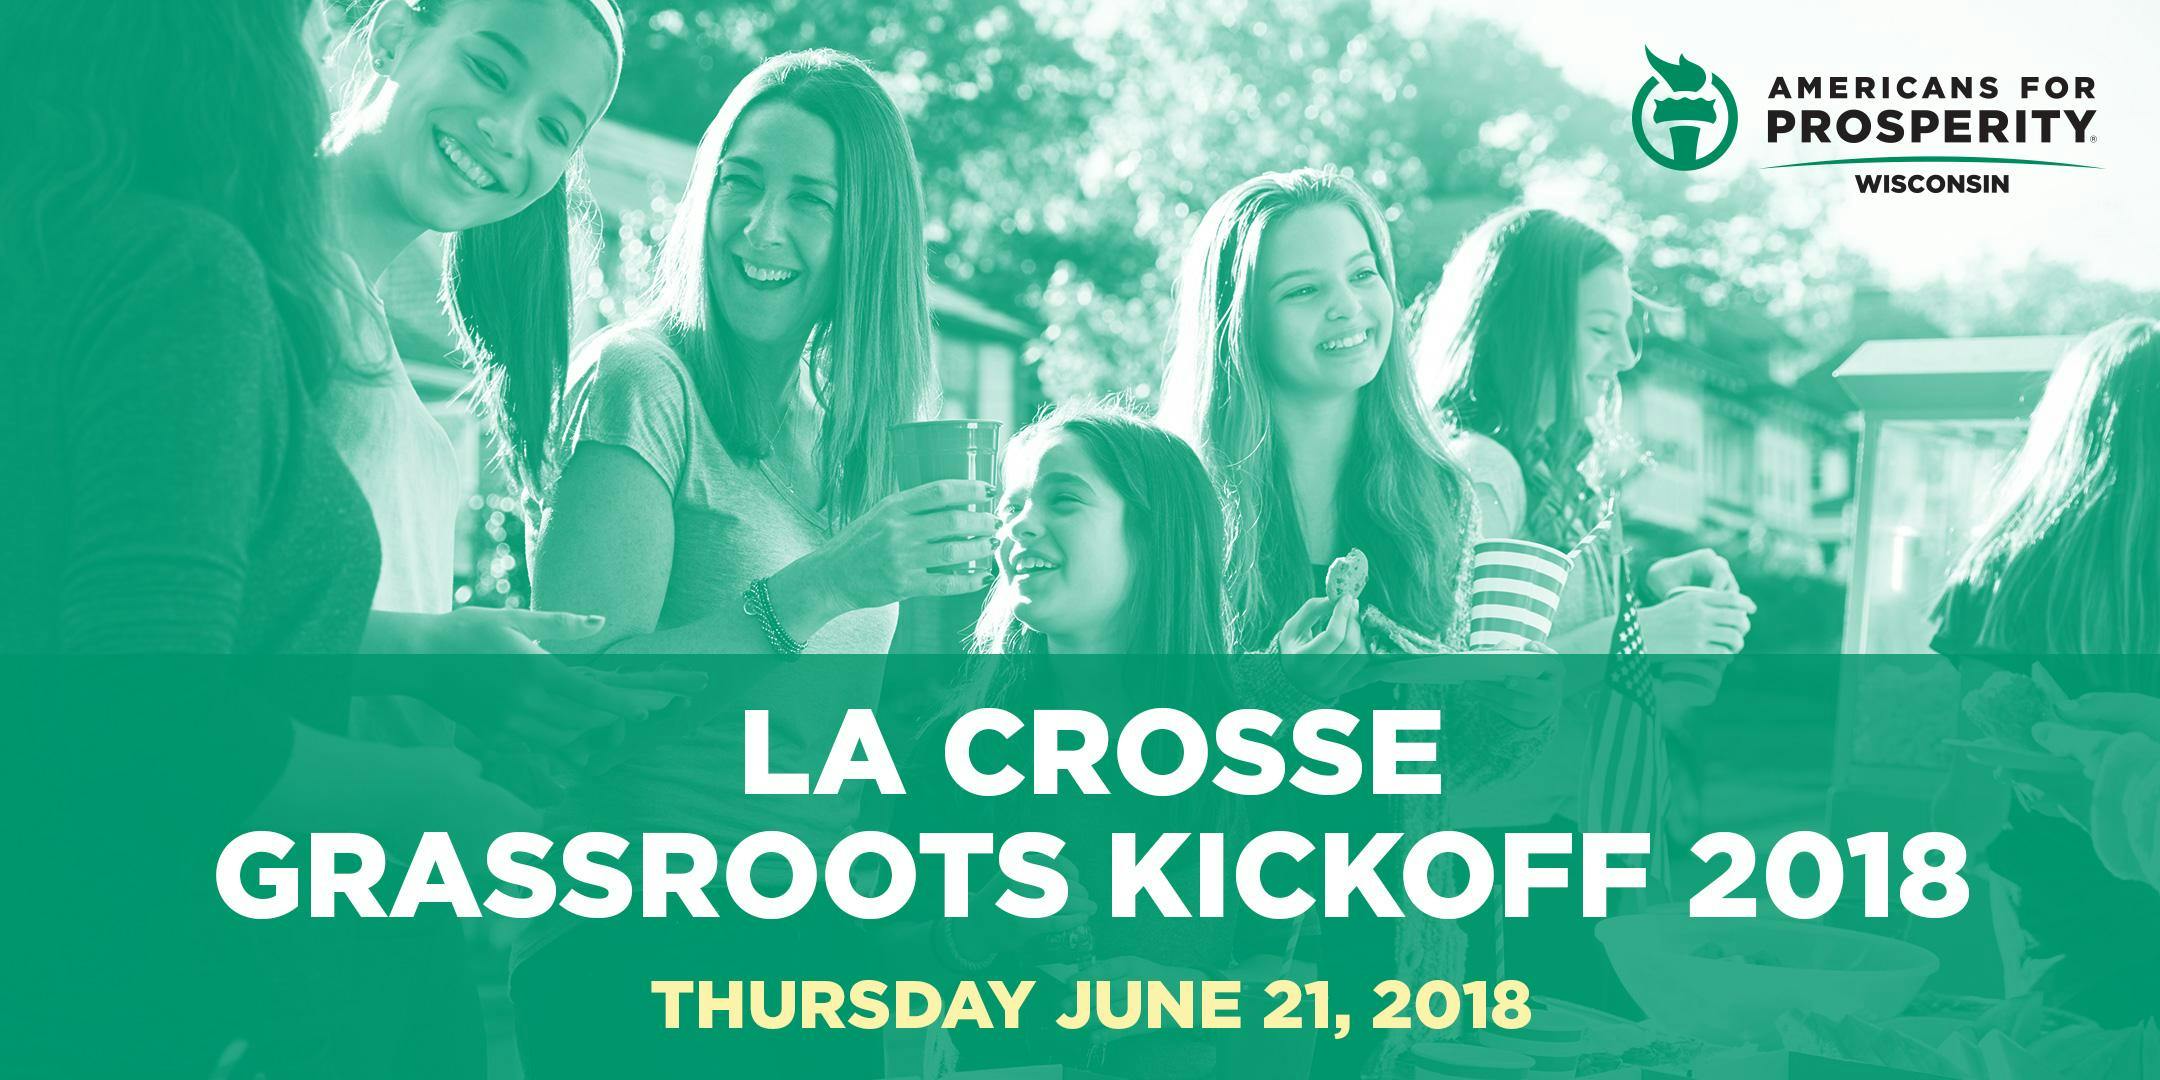 La Crosse Grassroots Kickoff 2018